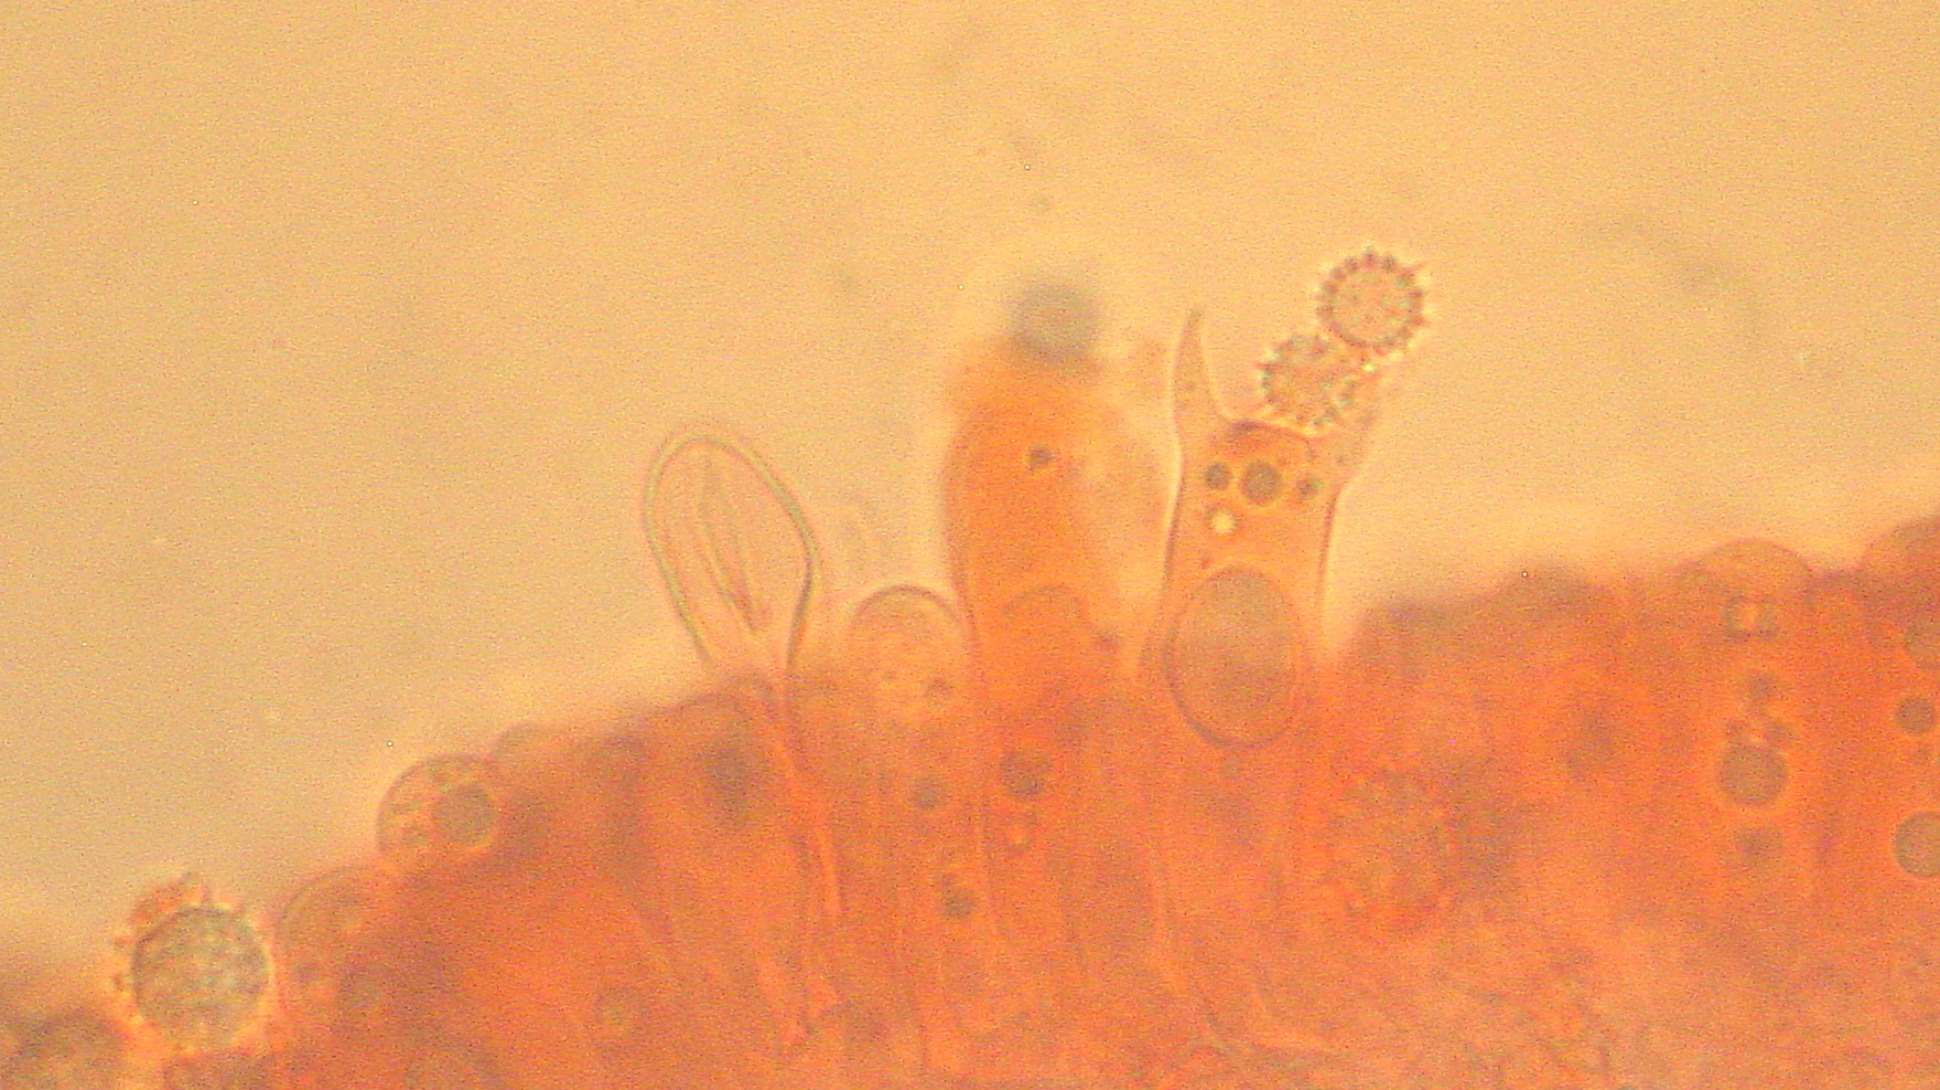 A semi-transparent image of a spore